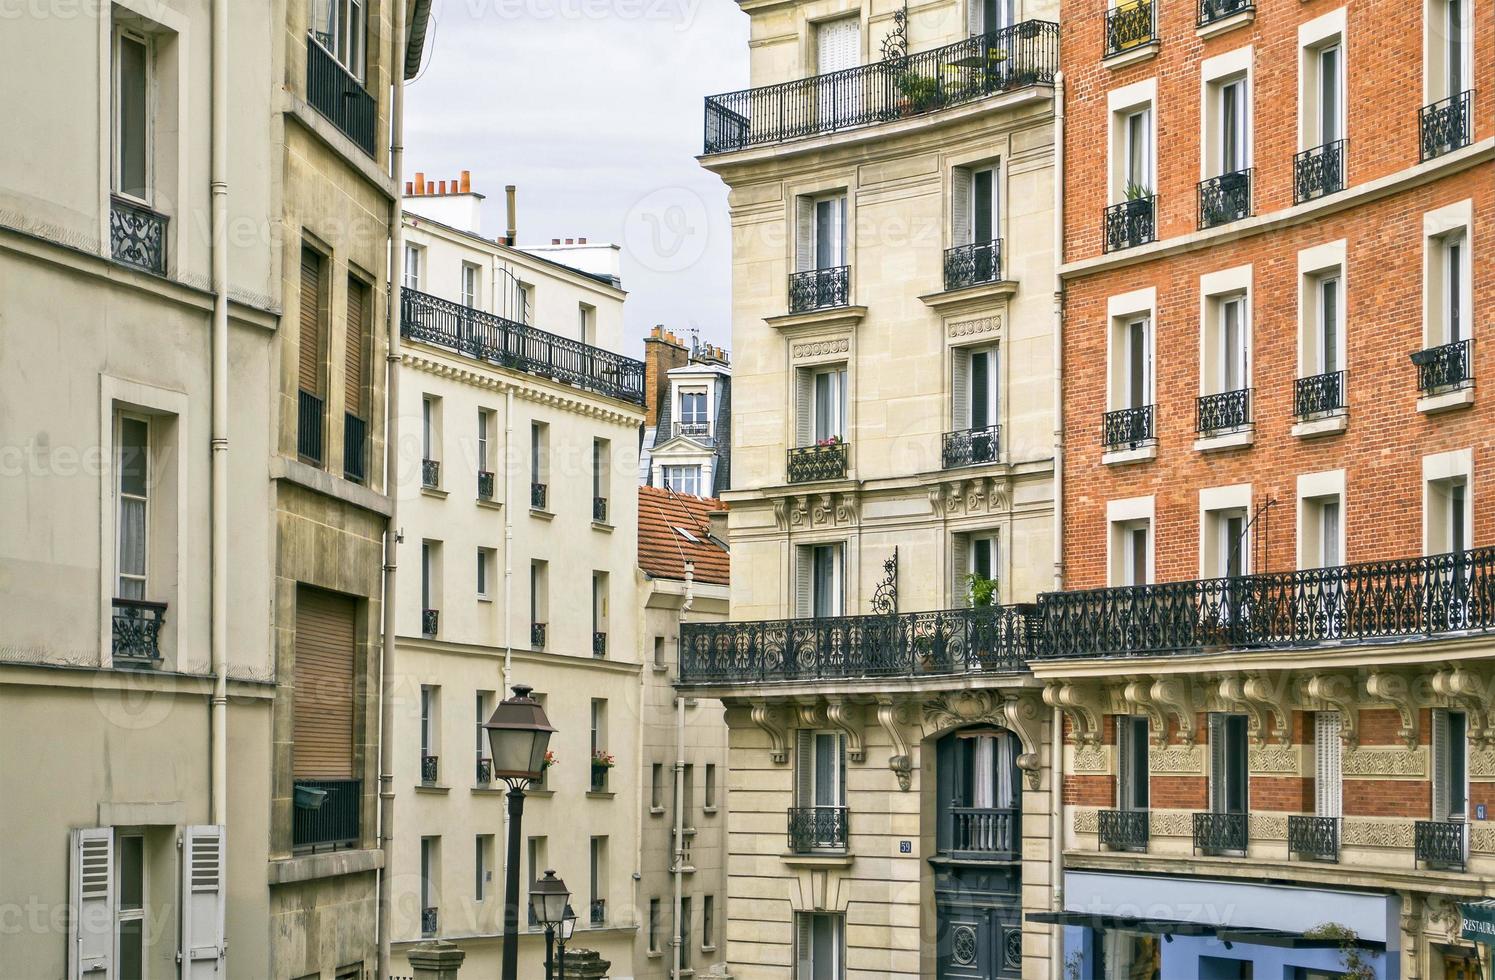 traditionella parisiska bostadshus. Paris, Frankrike. foto